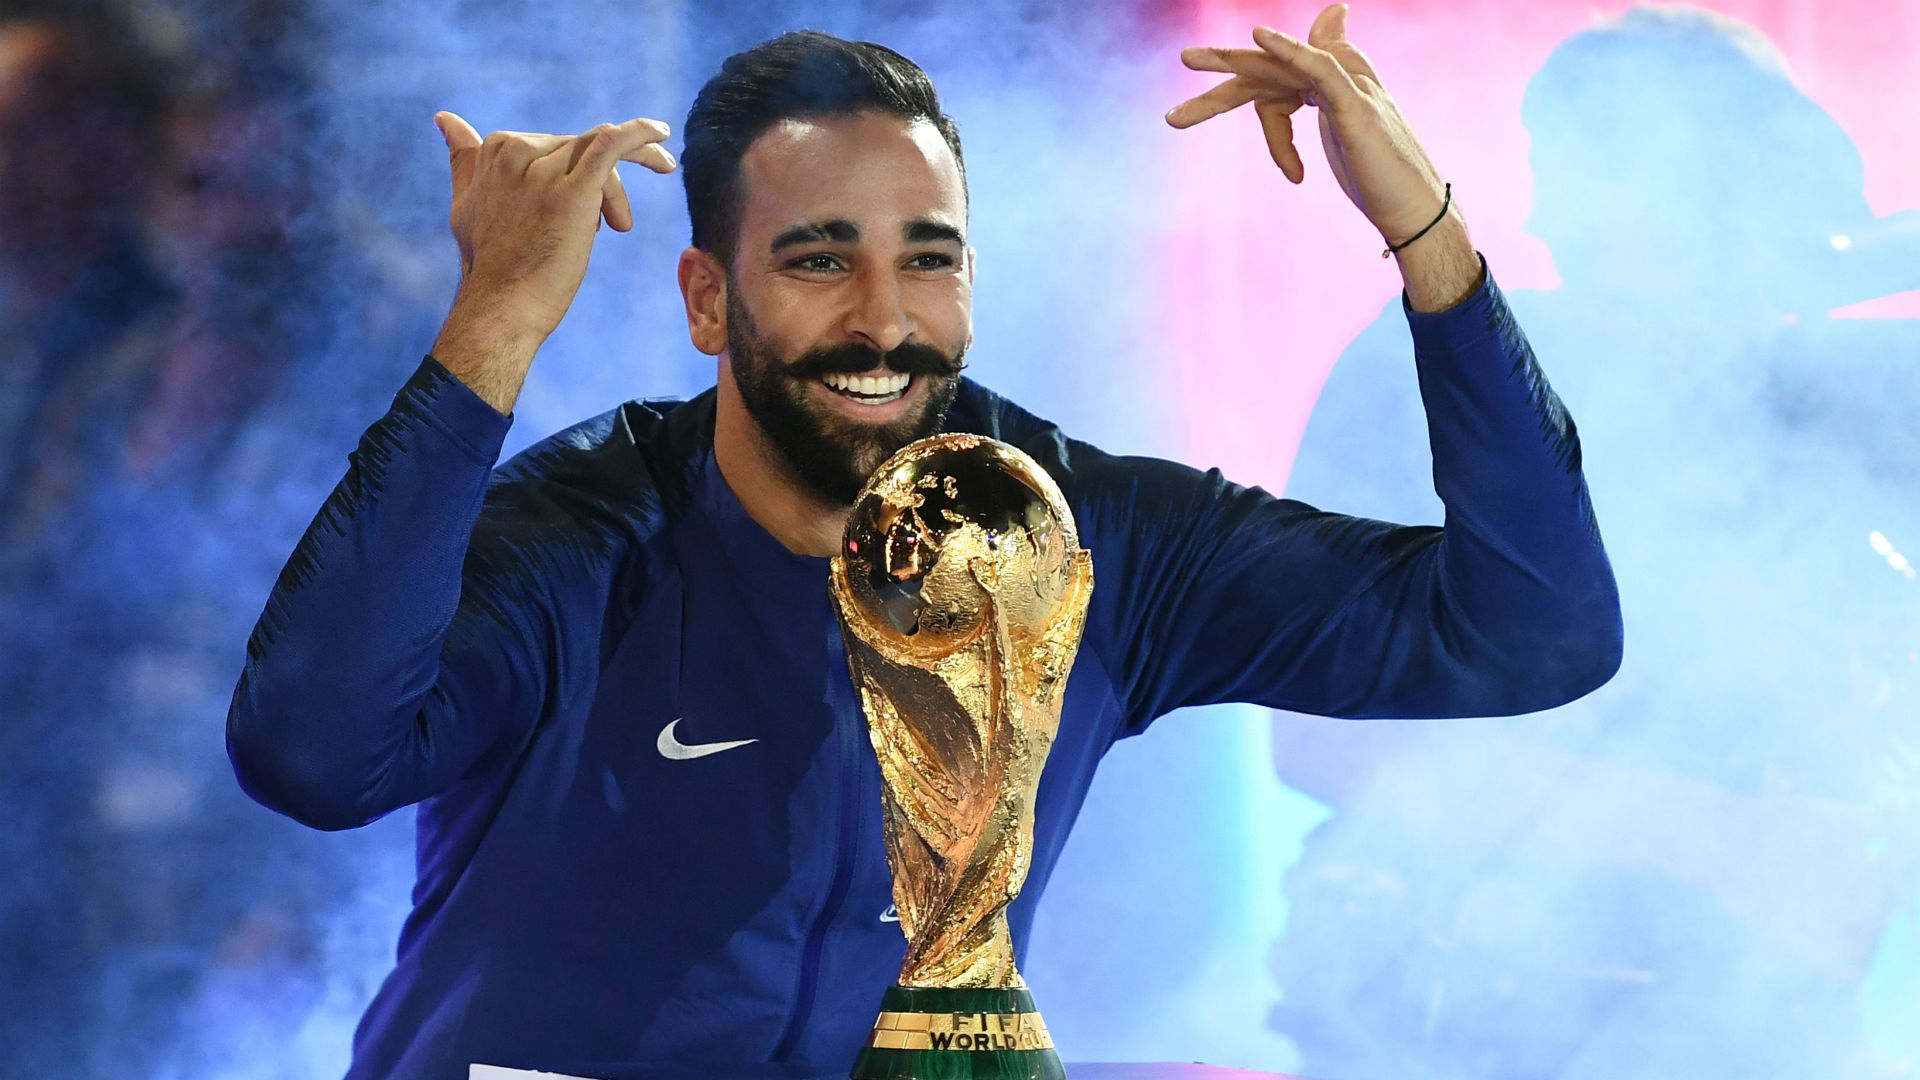 Coupe du Monde 2018 : L'incroyable gaffe d'Adil Rami face à la présidente croate